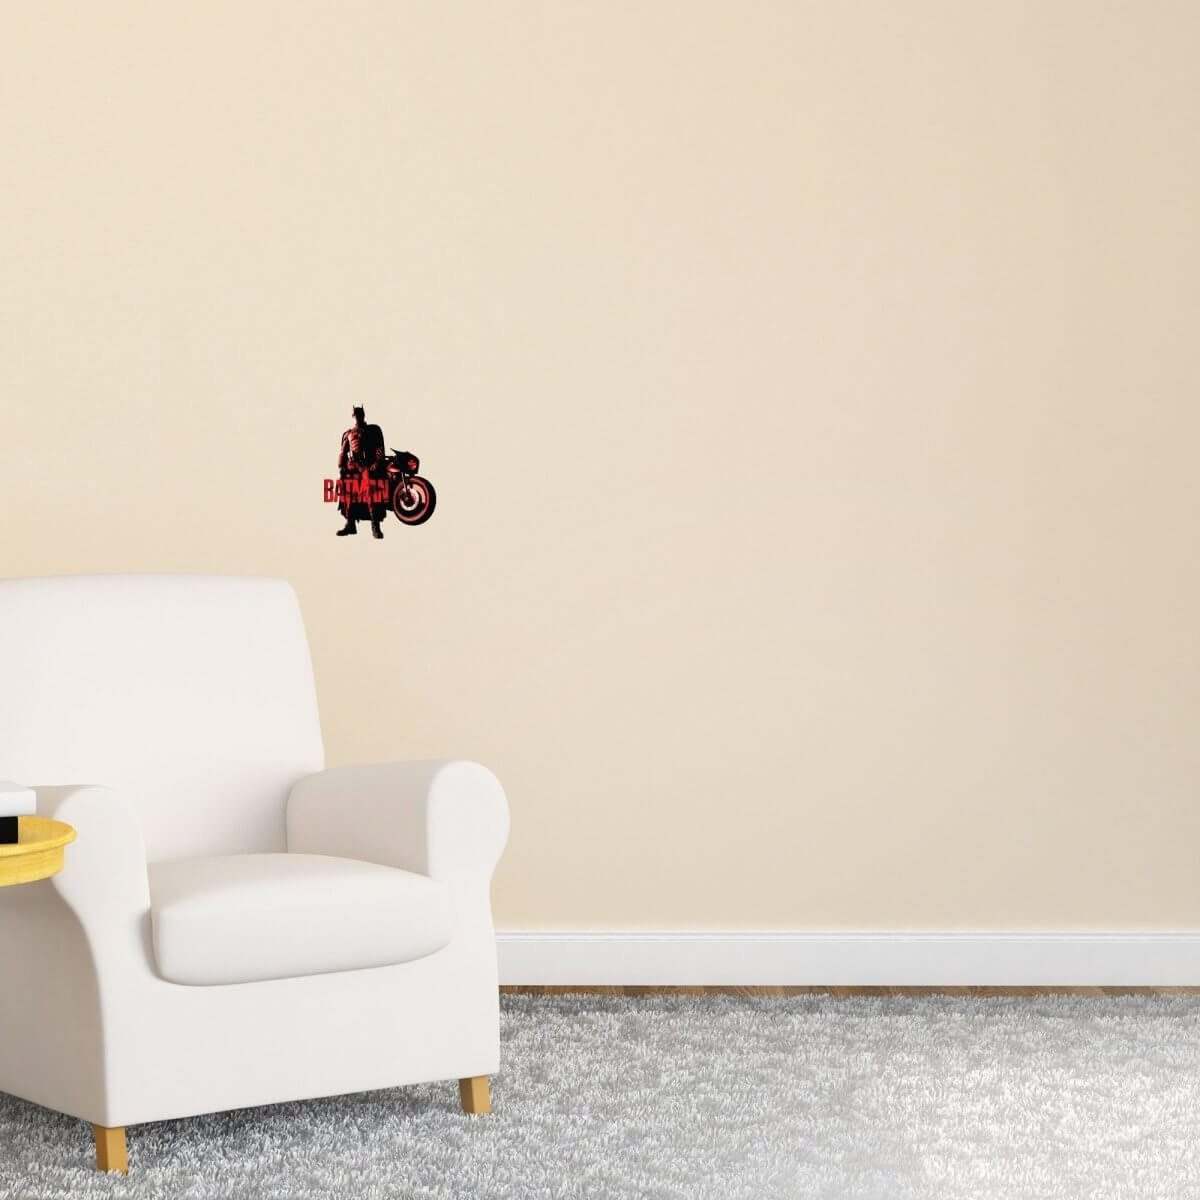 Kismet Decals The Batman 2022 & Batcycle battle ready Licensed Wall Sticker - Easy DIY Home & Kids Room Decor Wall Decal Art - Kismet Decals